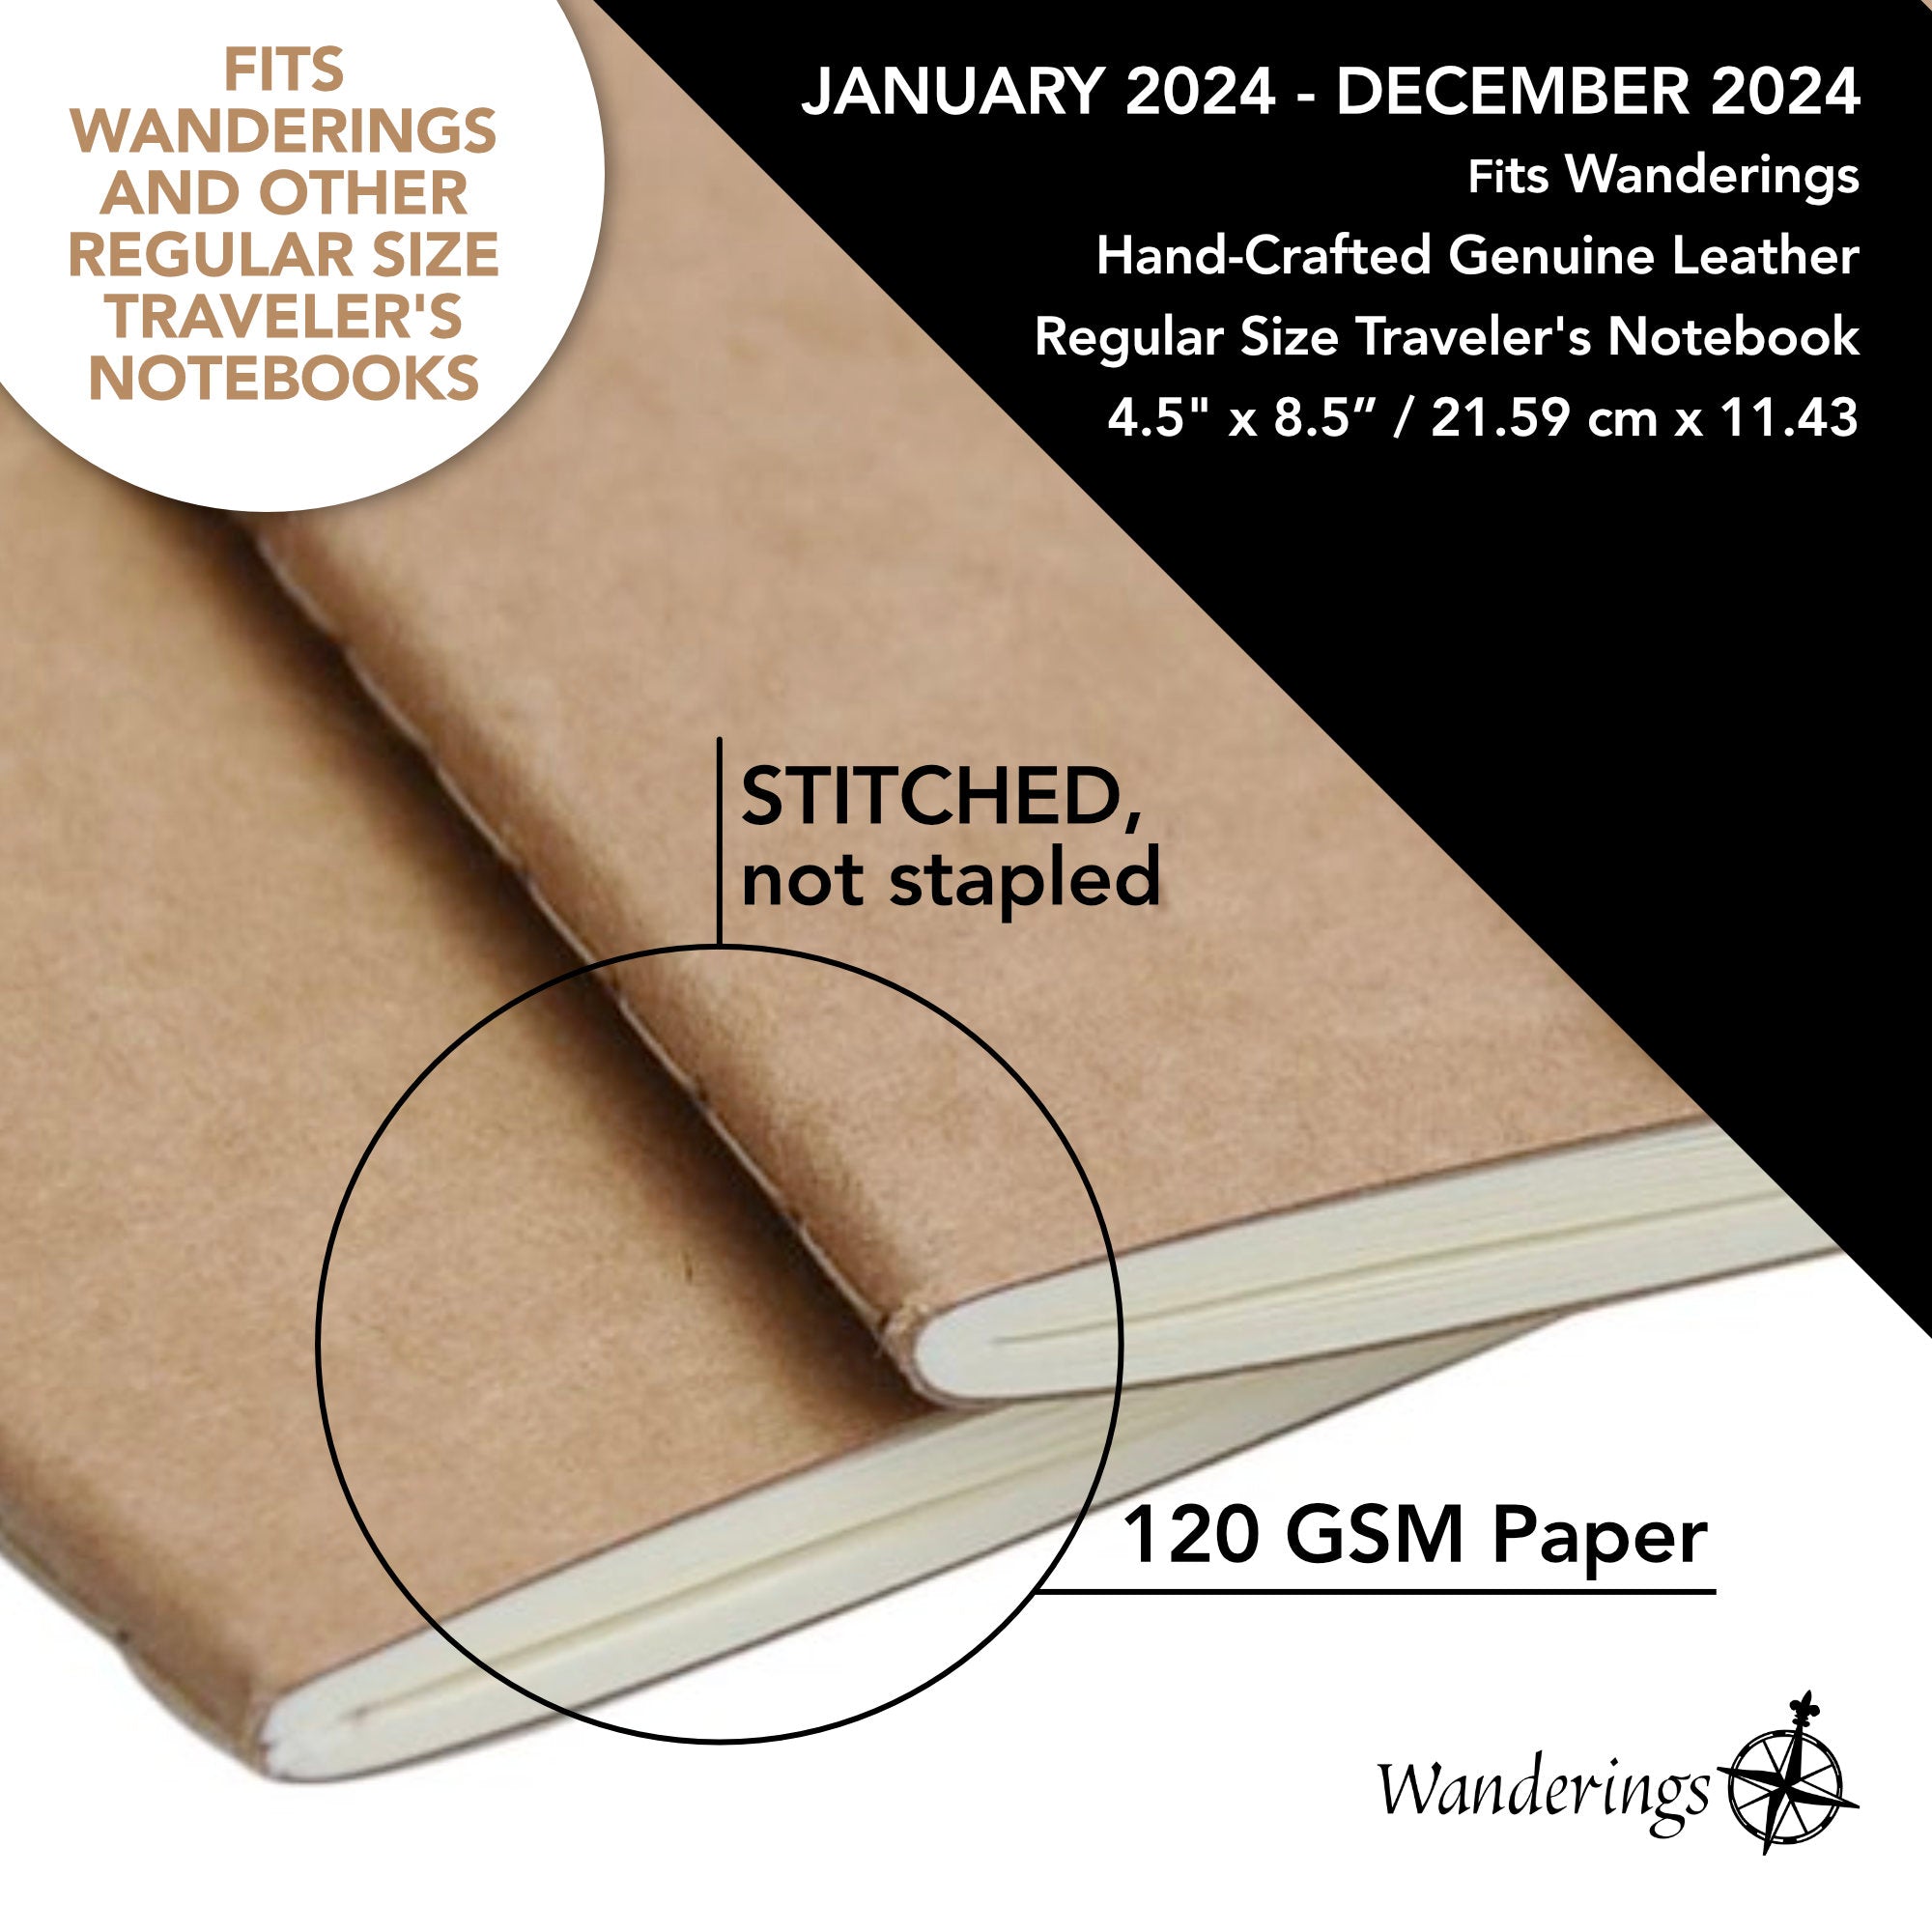 3 x Traveler's Notebook Inserts, STANDARD Size, Pink n Grey, 3